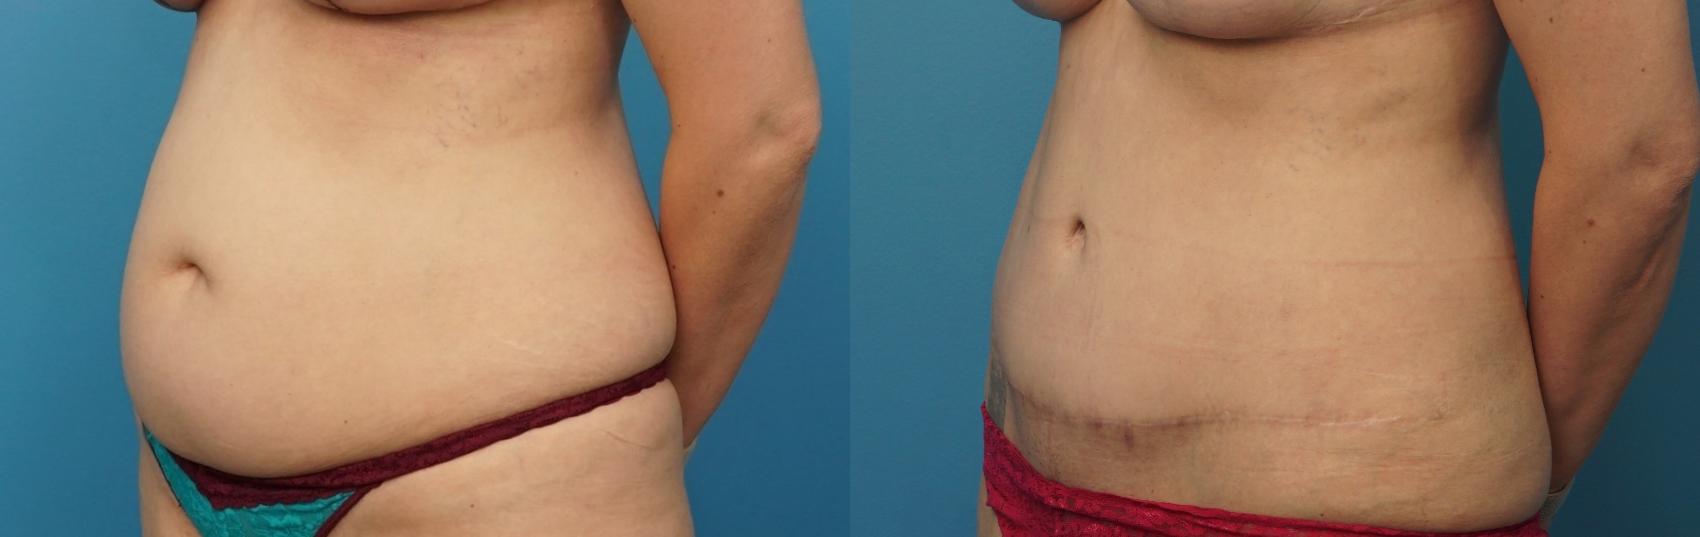 Before & After Abdominoplasty/Tummy Tuck Case 312 Left Oblique View in North Shore, IL